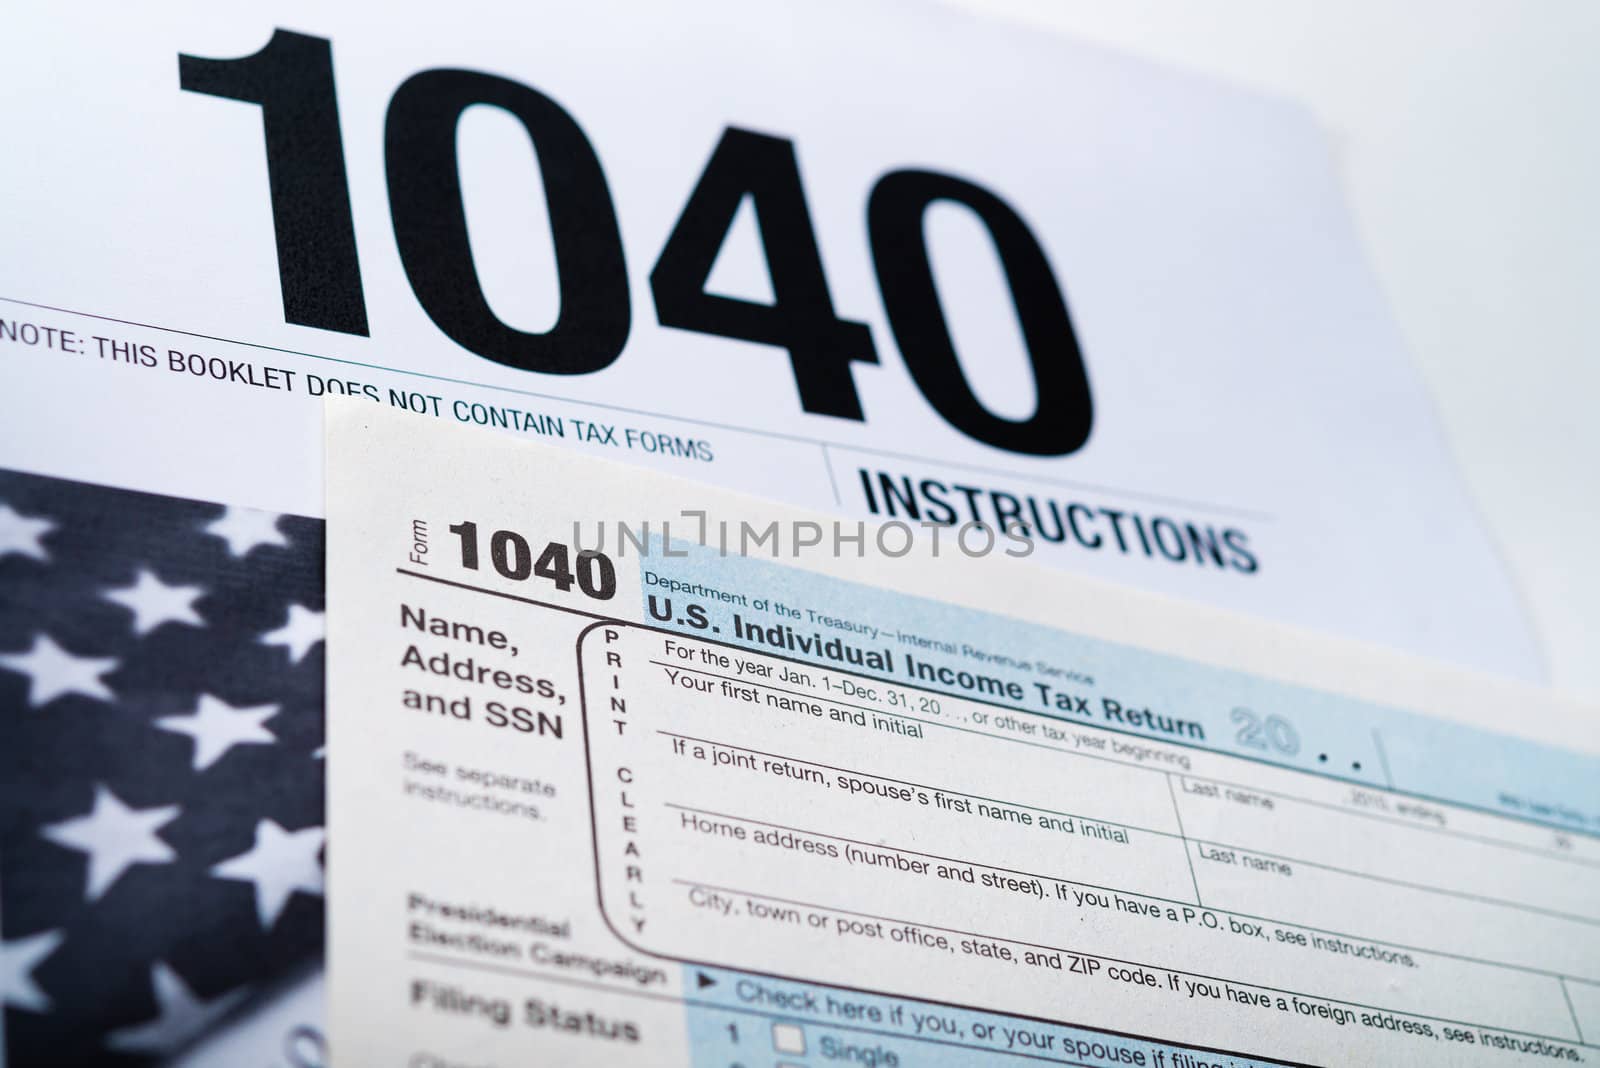 U.S. Income Tax Return form 1040.